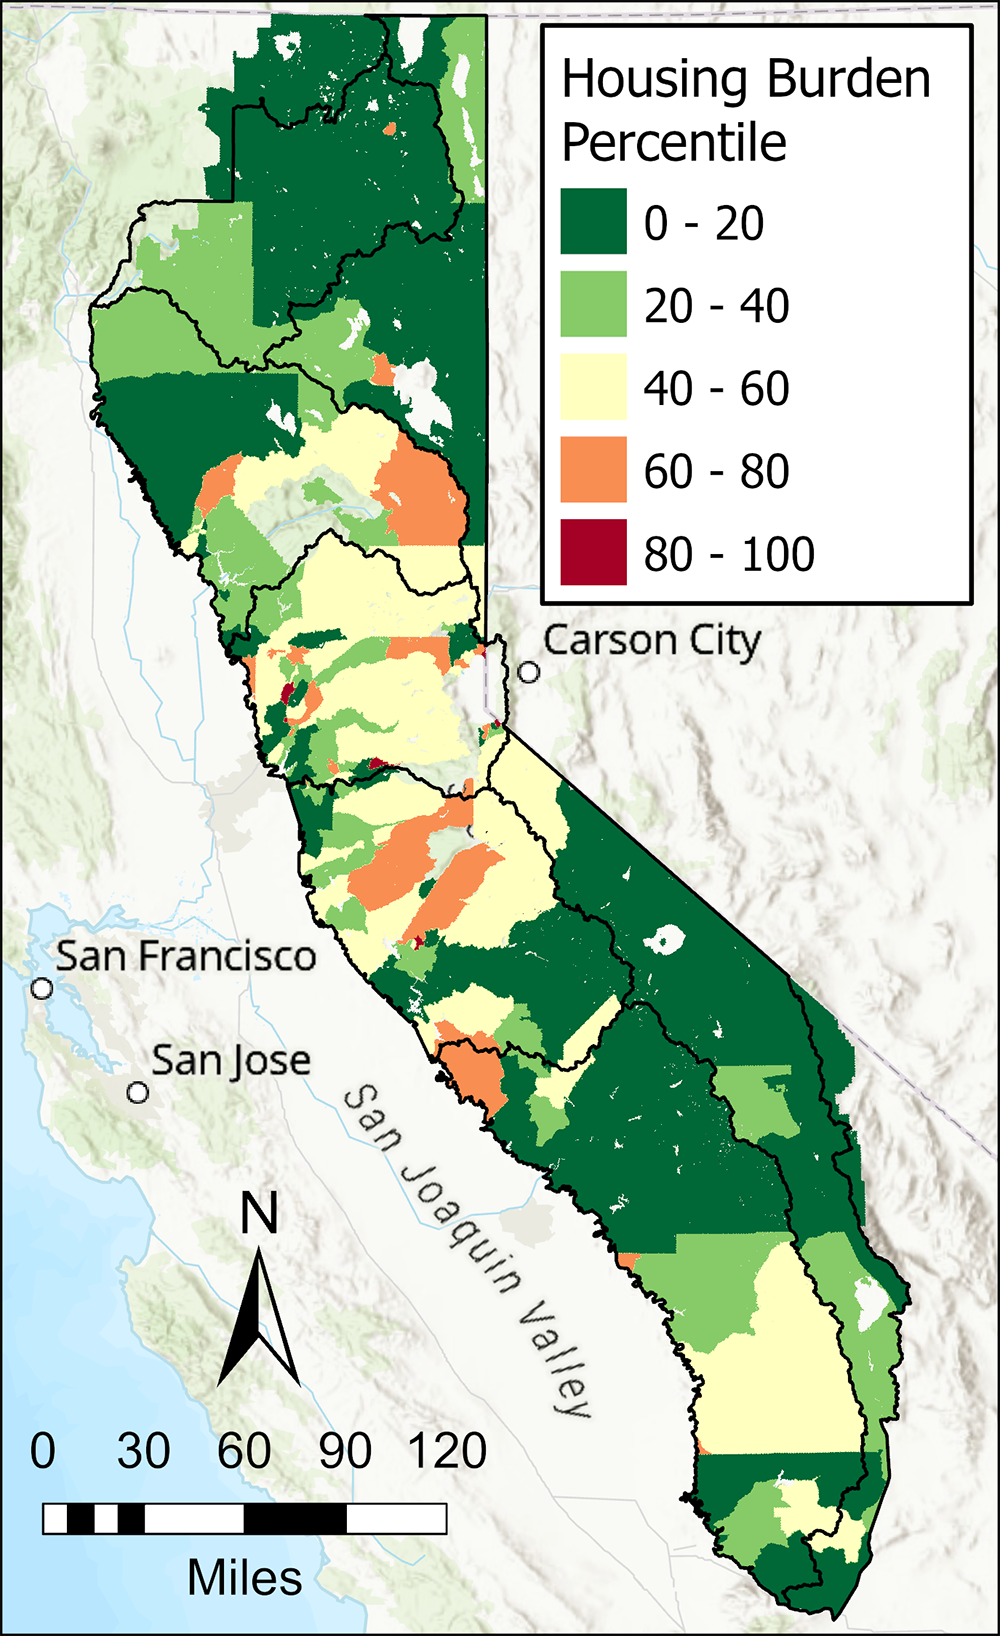 Housing Burden Percentile on Map of California